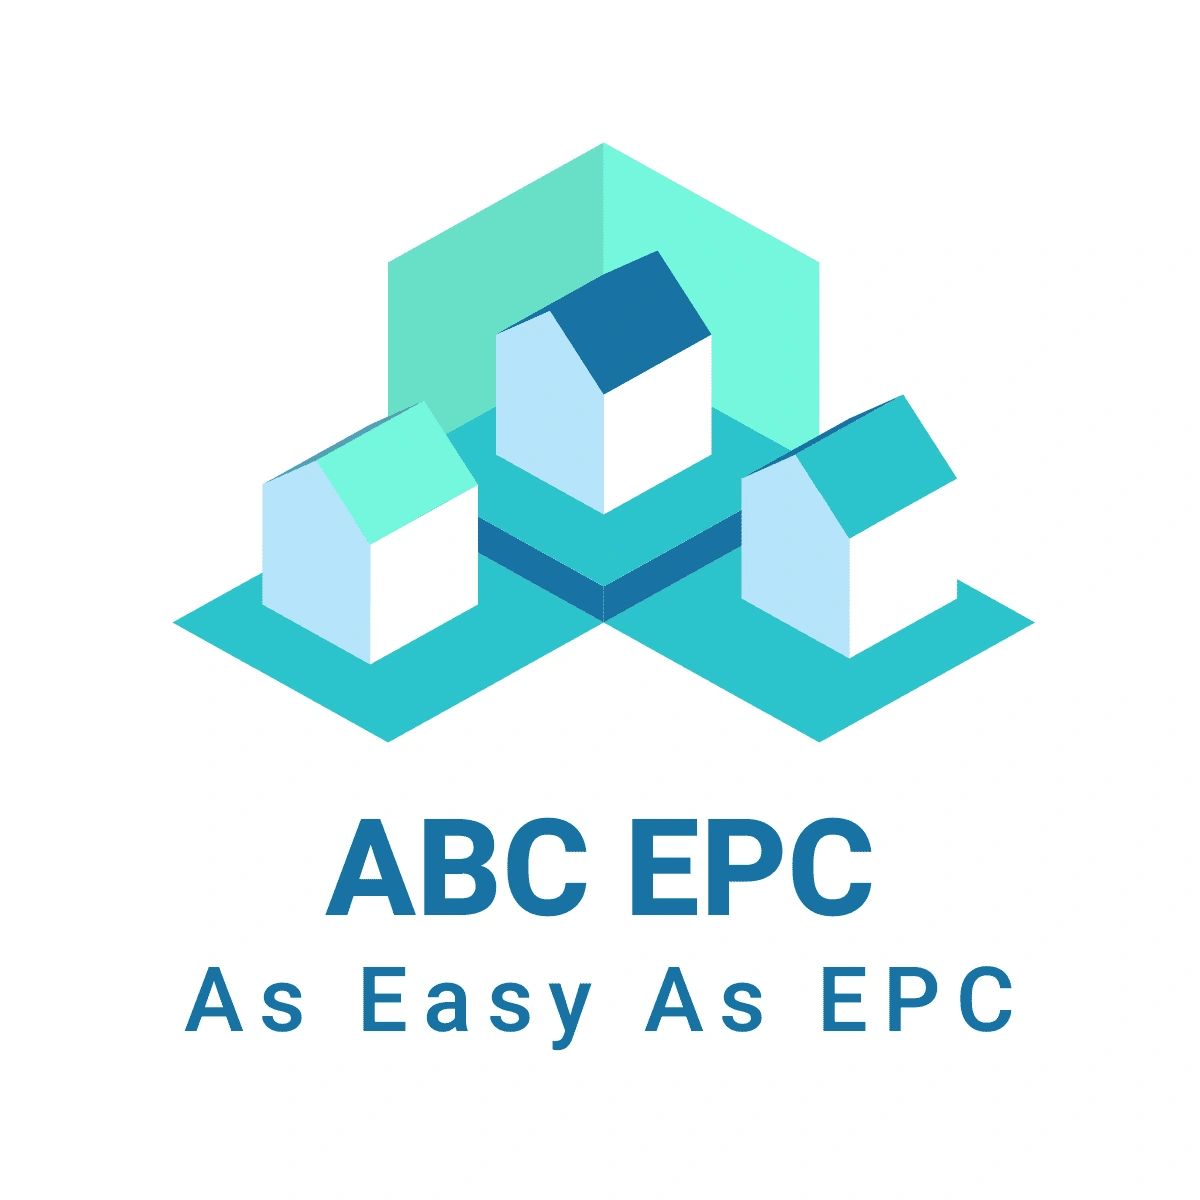 ABC EPC Company name LOGO, 3 houses on squares. A pastel light blue colour. Tag Line As Easy As EPC